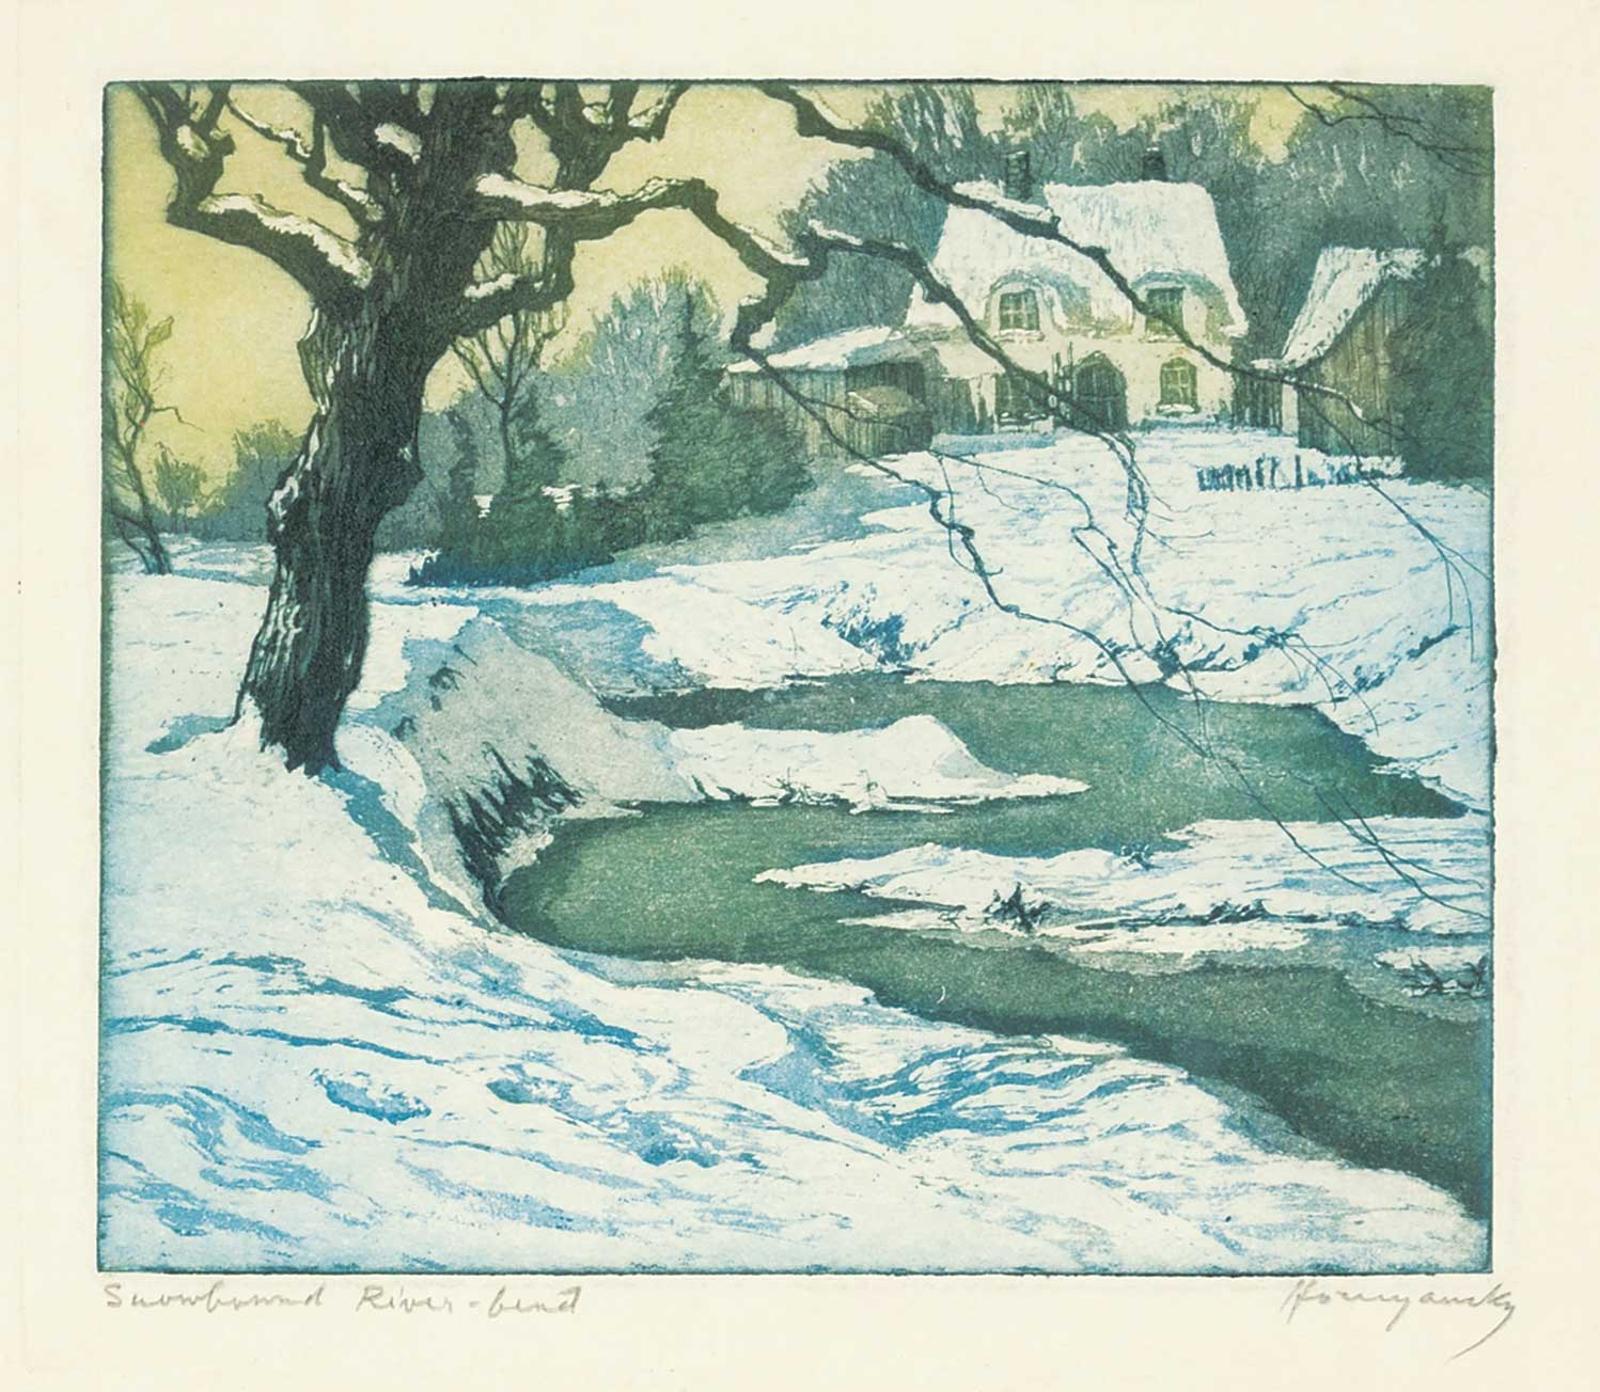 Nicholas Hornyansky (1896-1965) - Snowbound River-bend